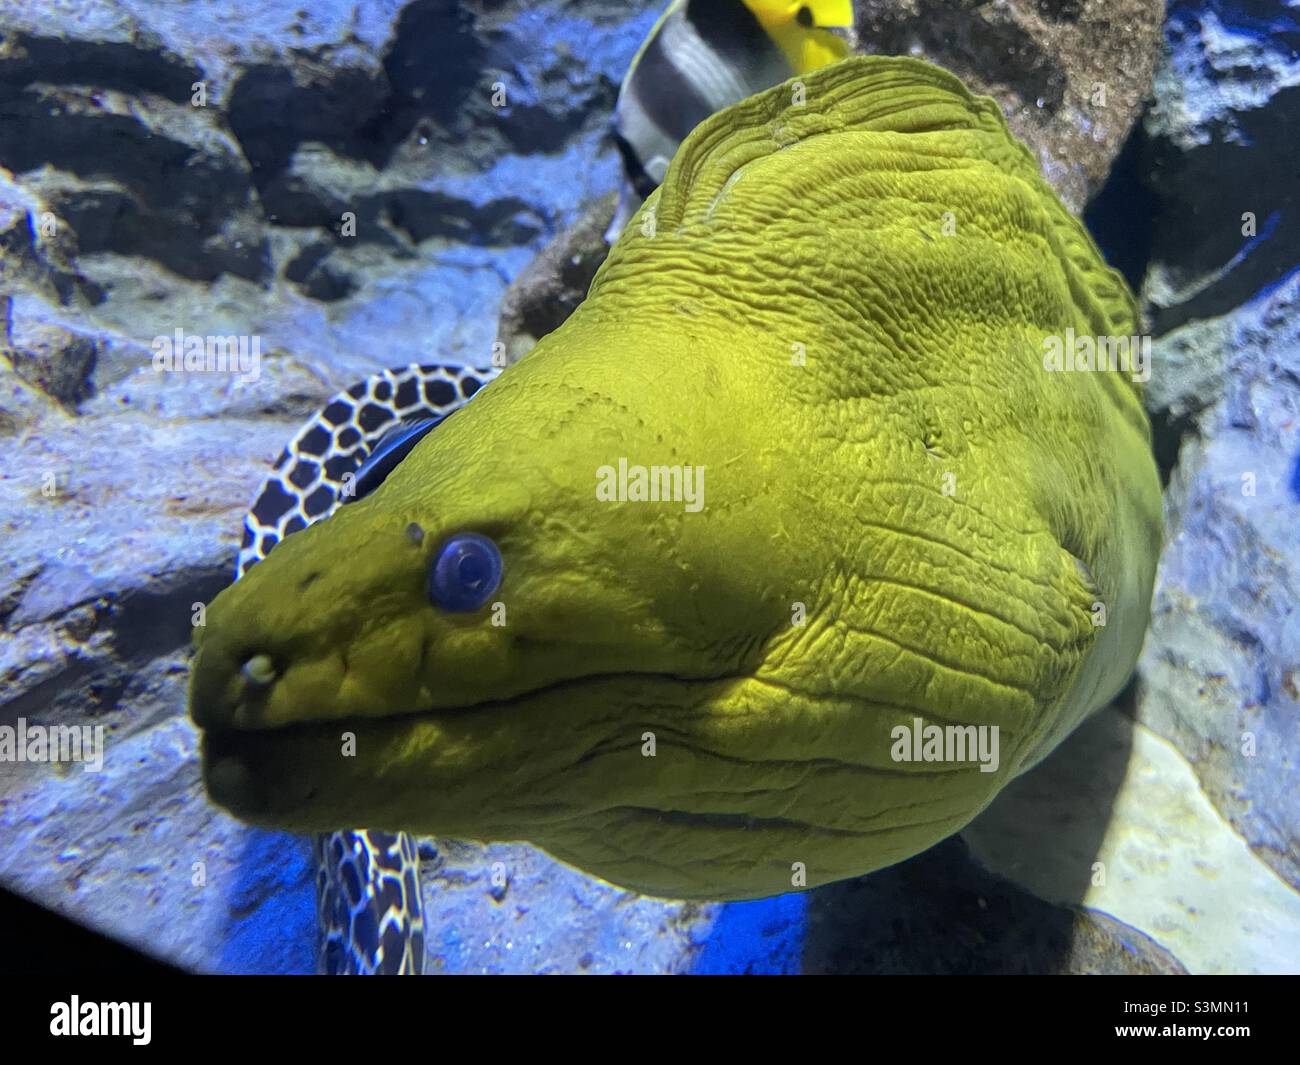 Blue eyed moray eel in salt water aquarium Stock Photo